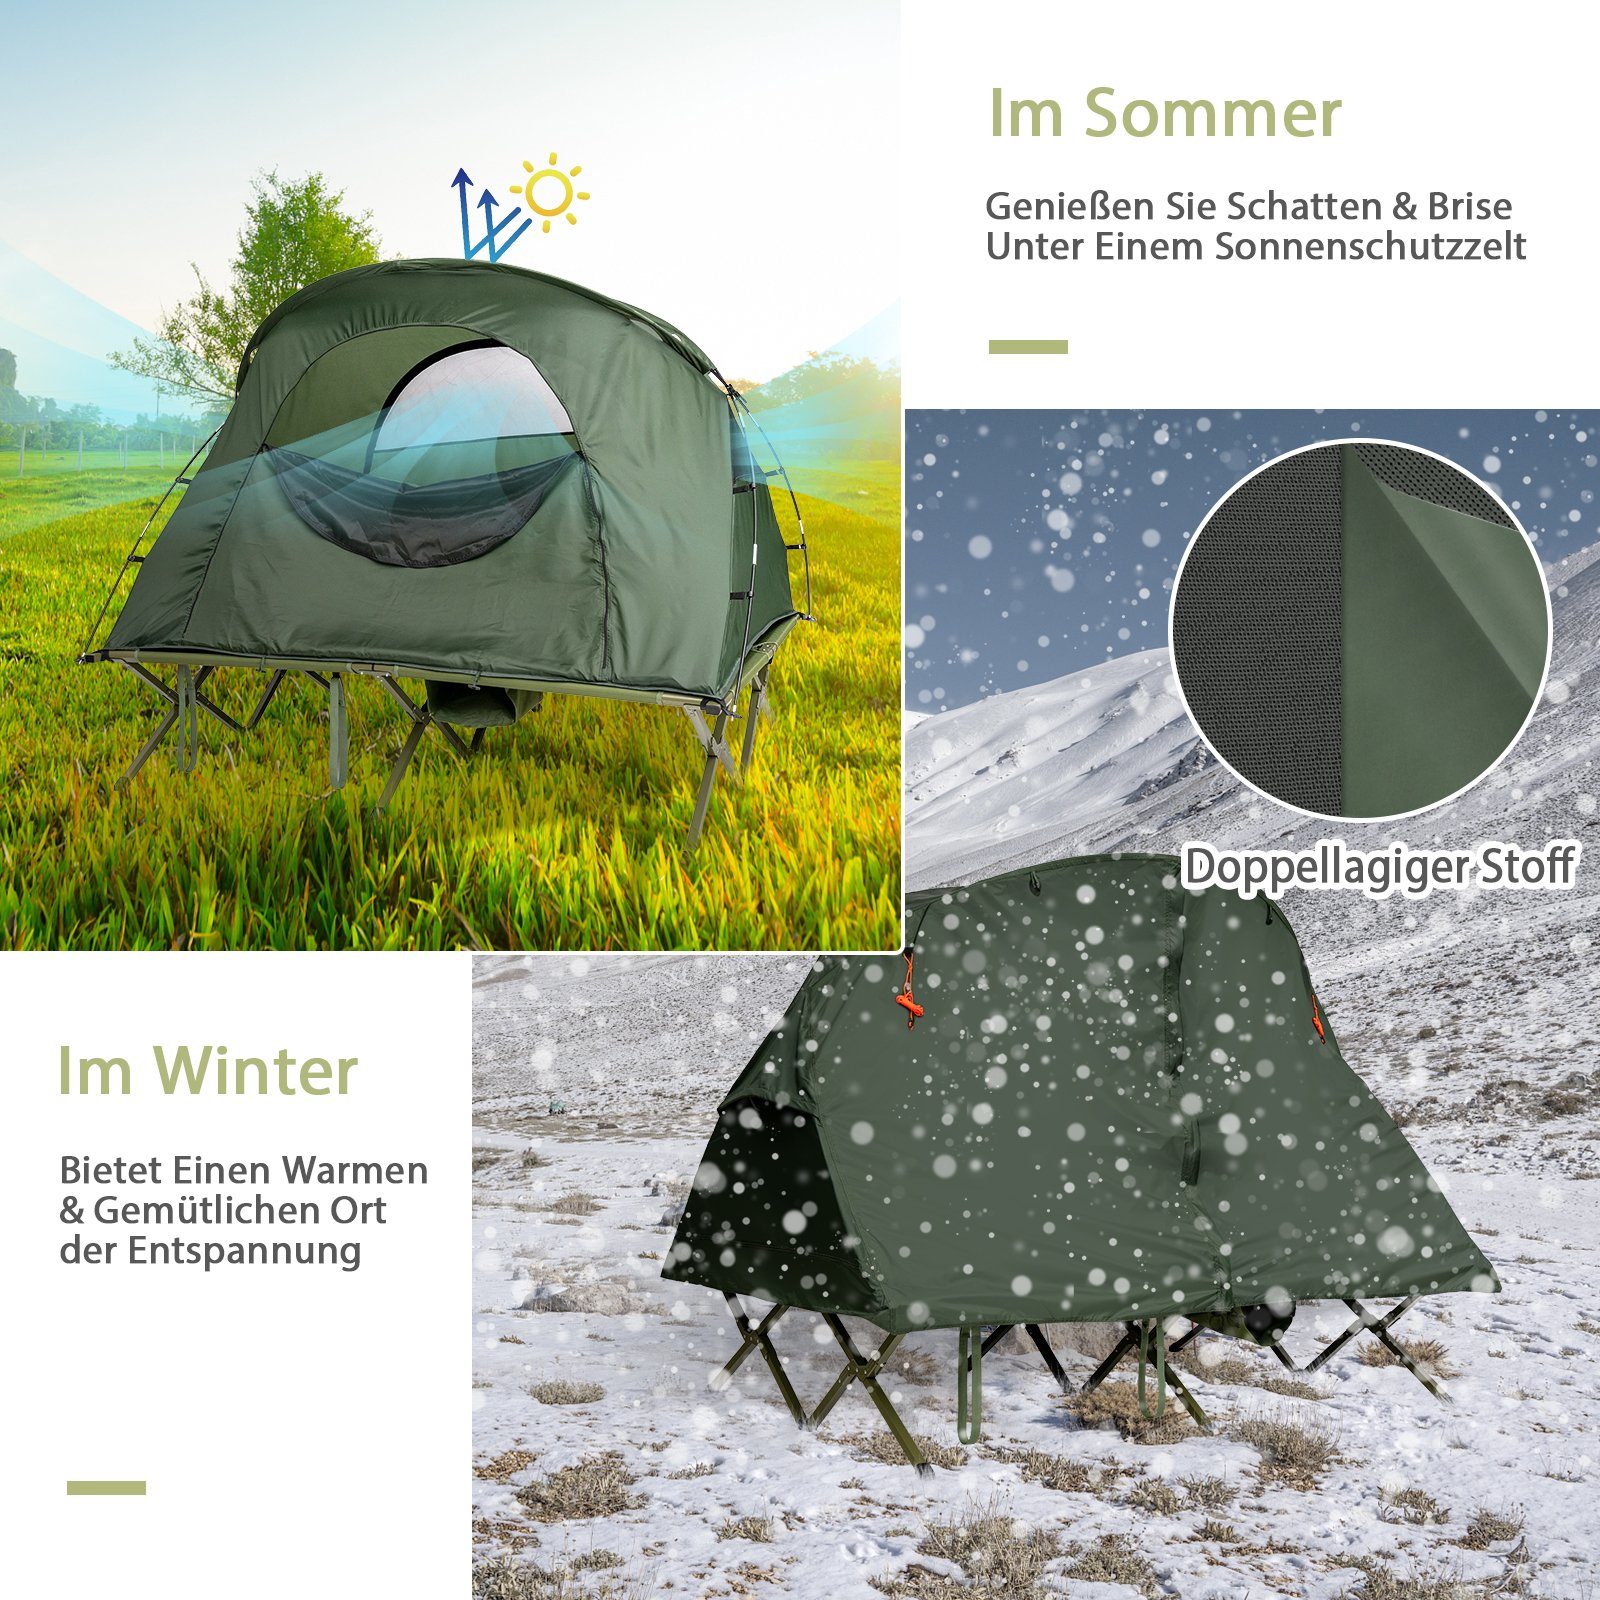 grün Campingzelt, Personen: mit 2, Kuppelzelt COSTWAY Tasche